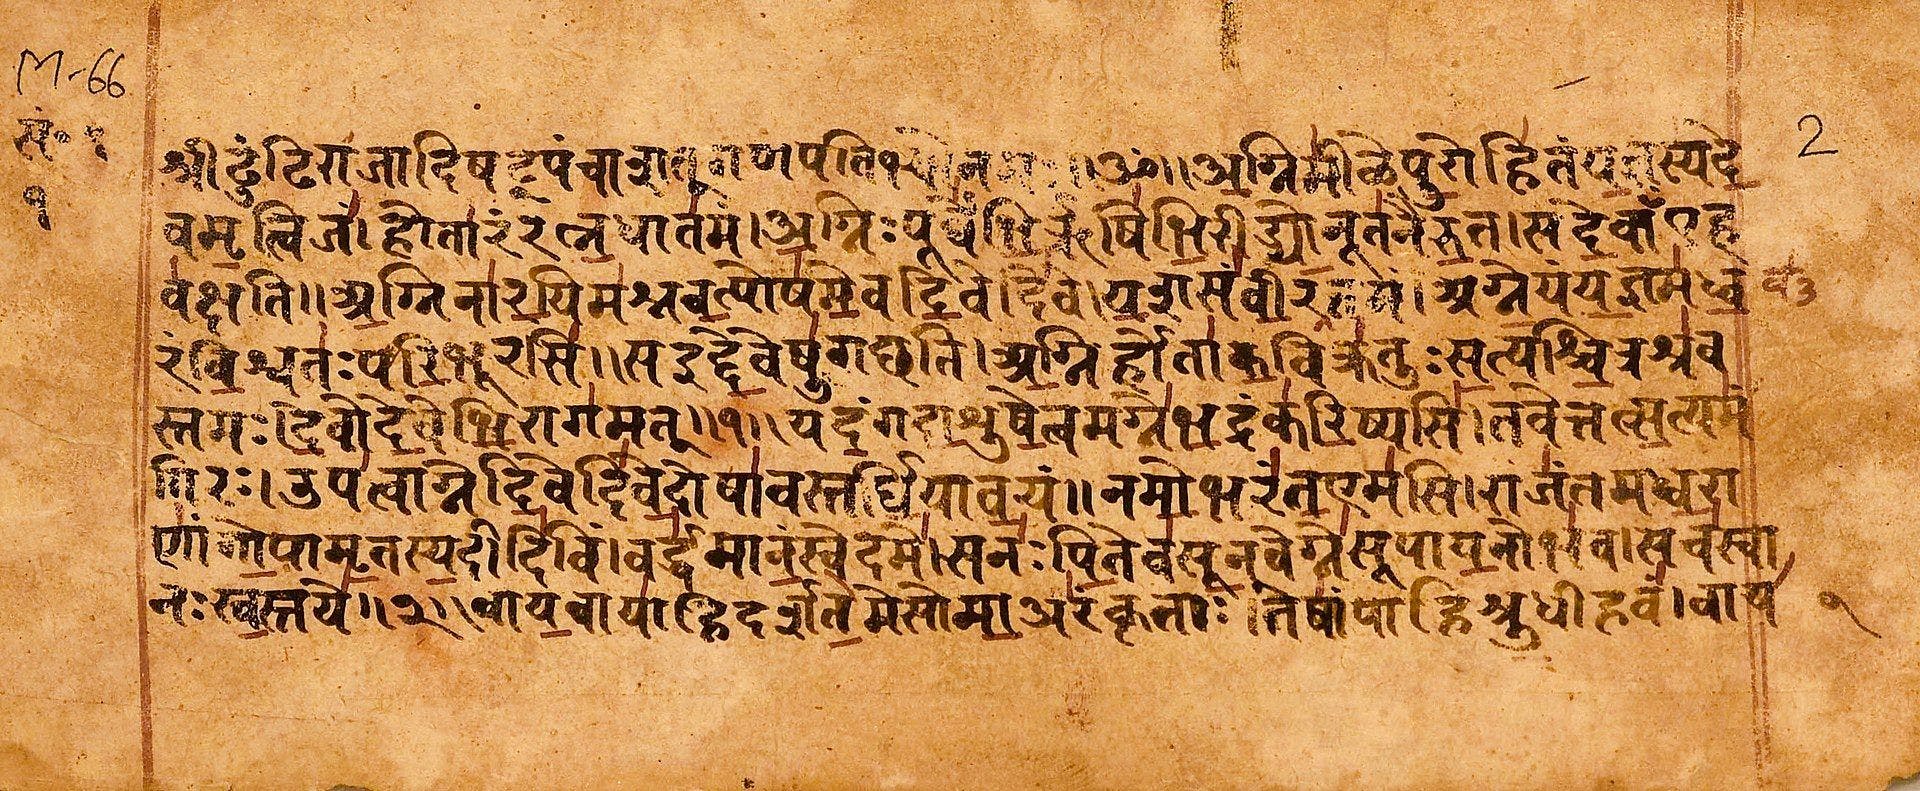 Rig Veda manuscript page (Sanskrit, Devanagari script)